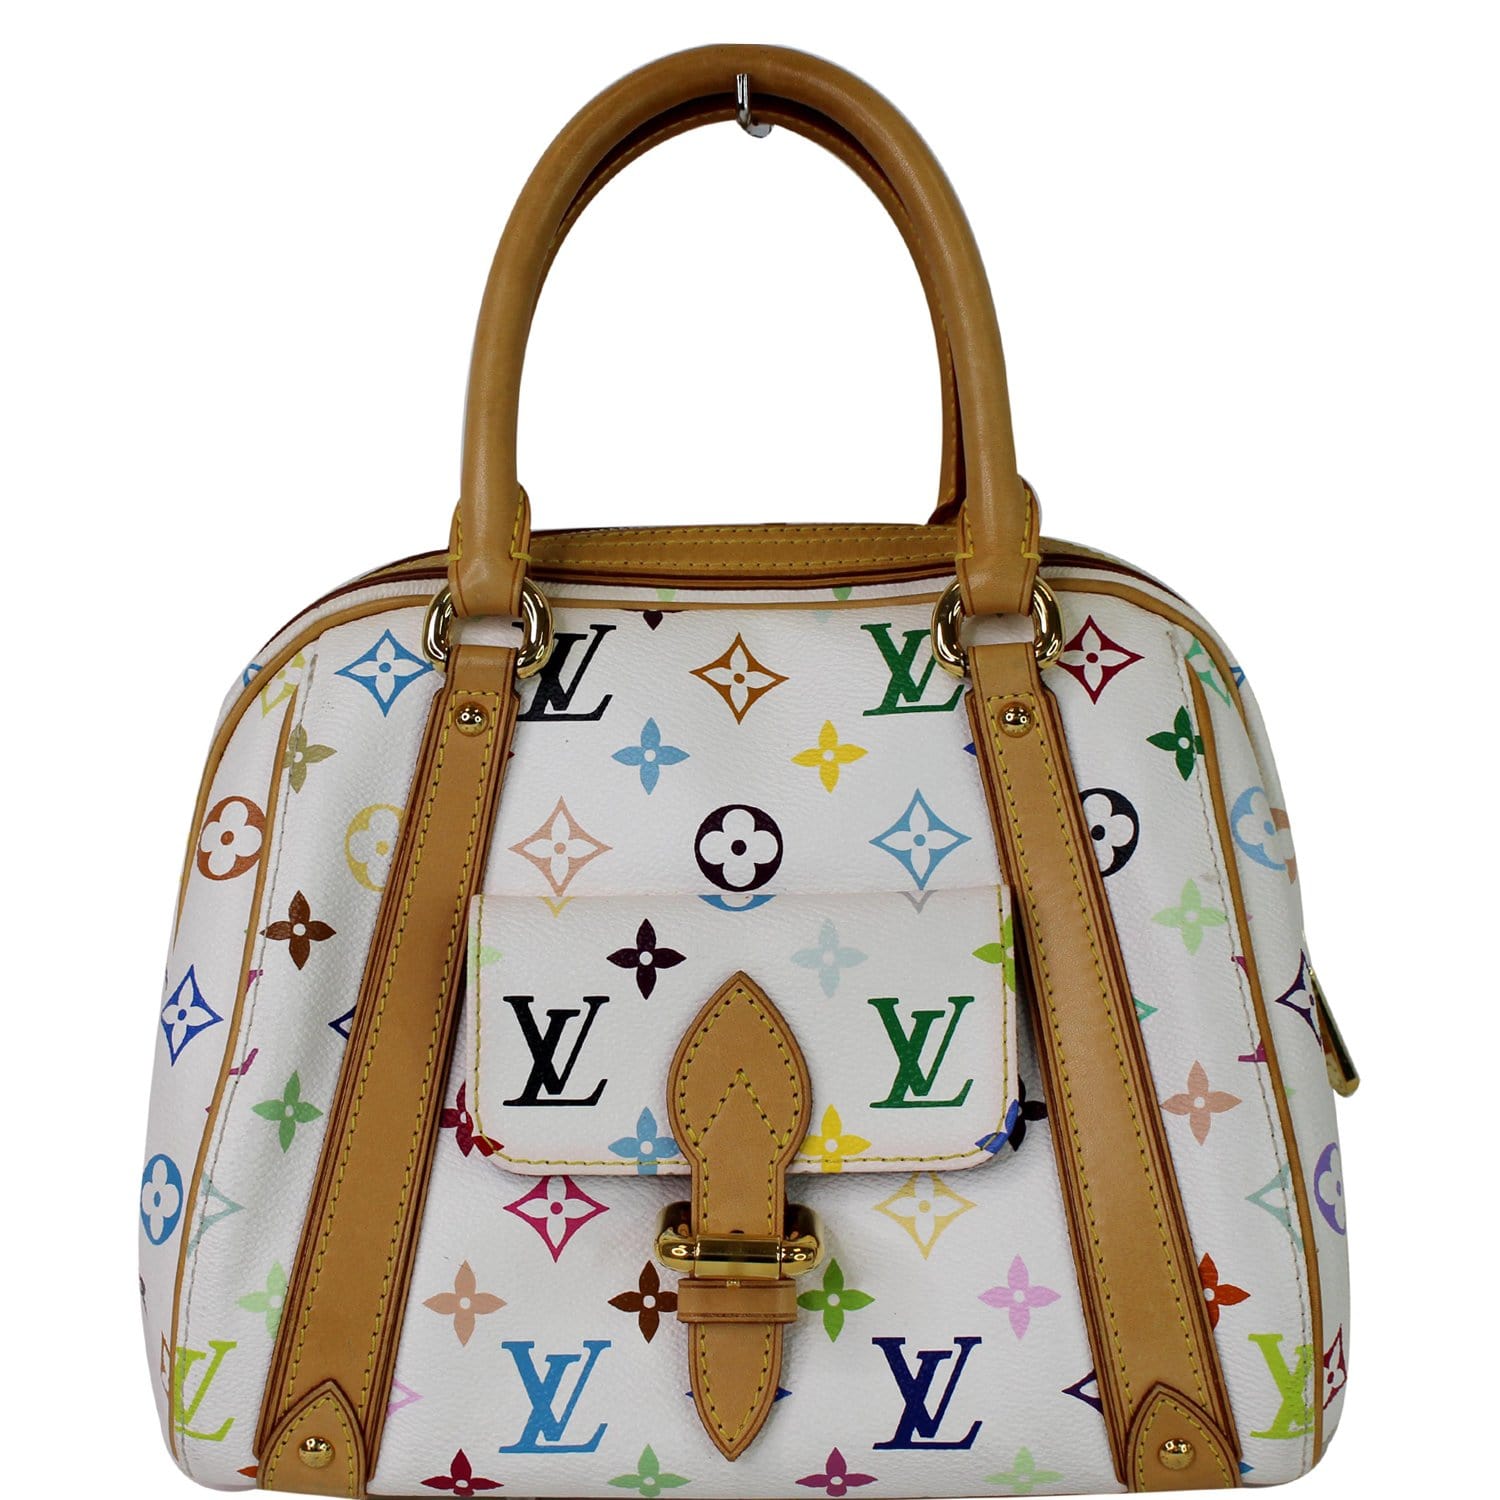 Louis Vuitton White Monogram Multicolore Canvas Alma PM Bag.Very